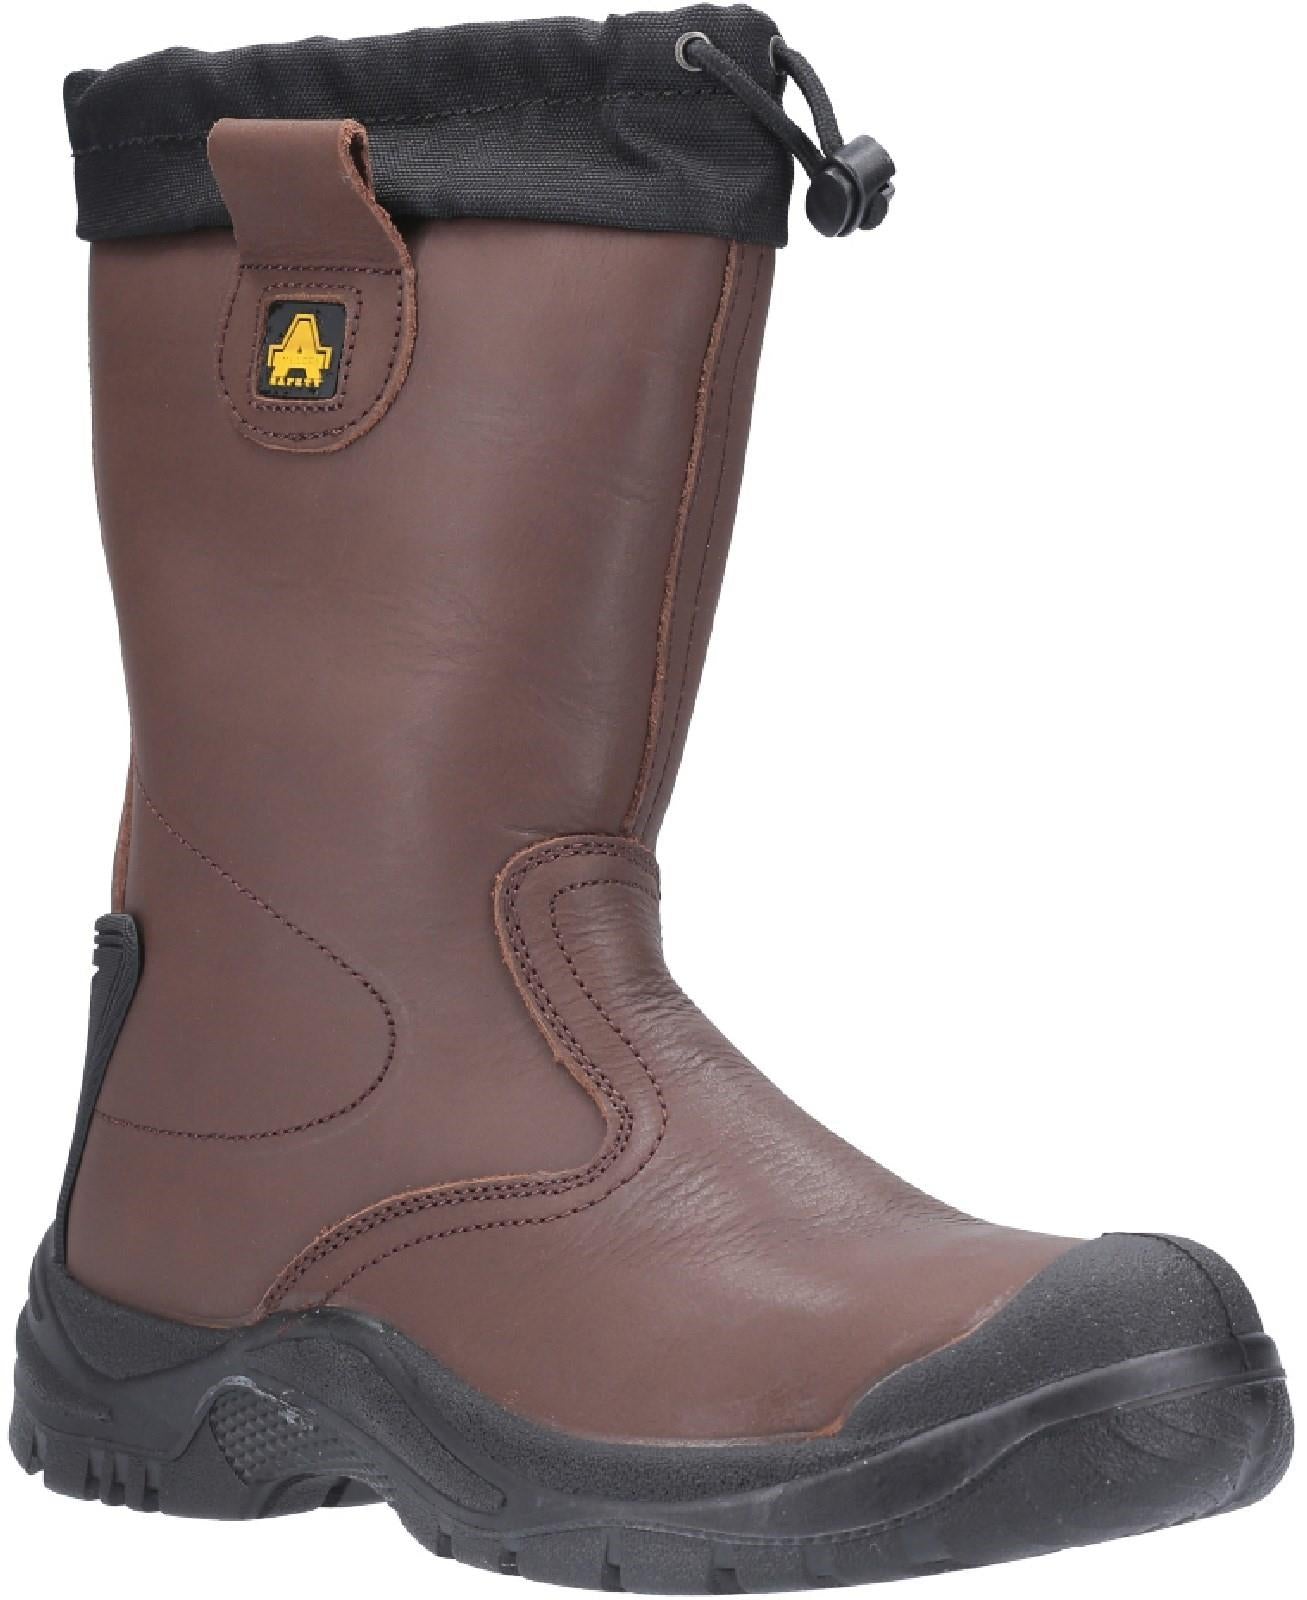 Amblers S3 brown waterproof steel toe/midsole safety rigger boot #AS245